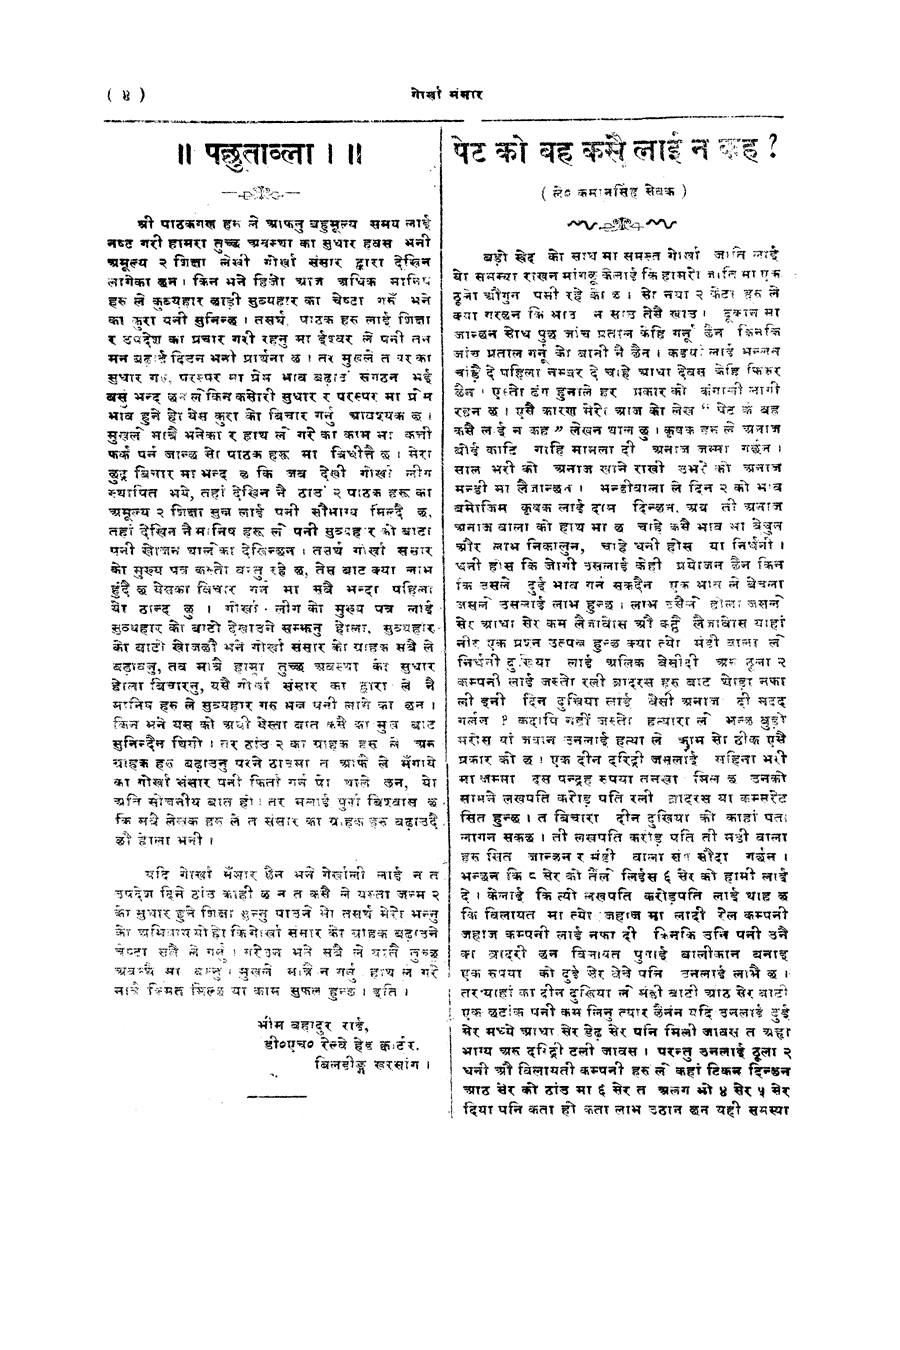 Gorkha Sansar, 8 June 1928, page 4